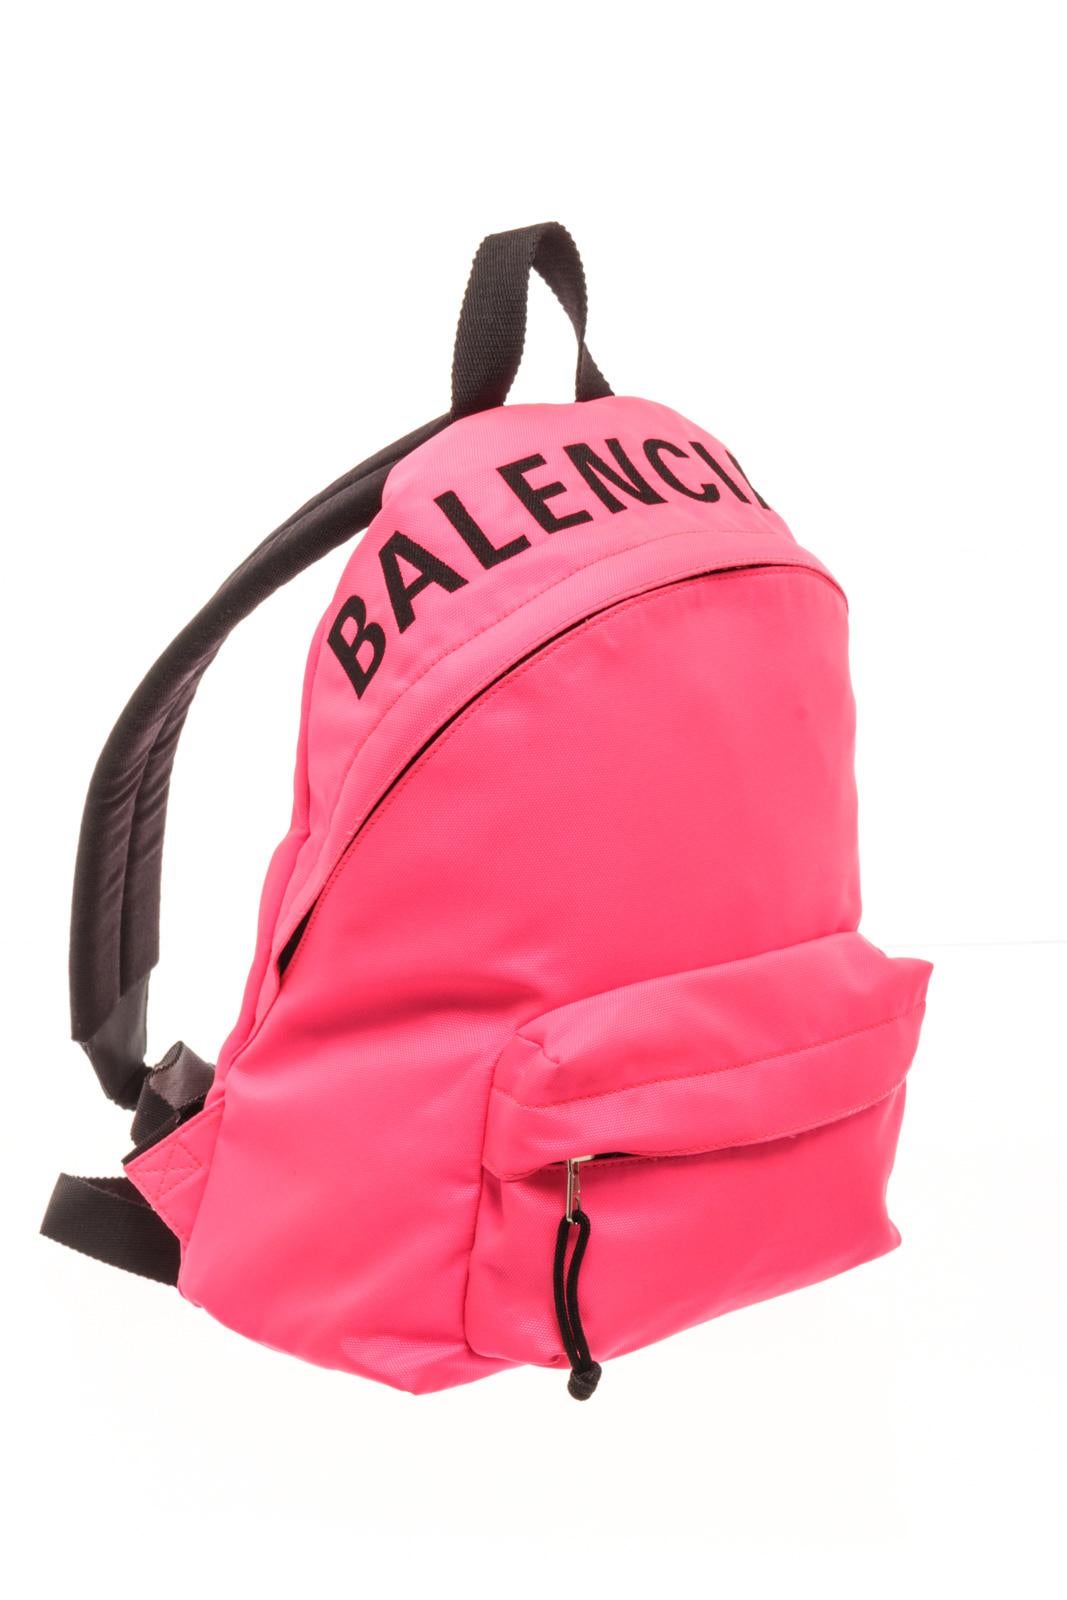 Balenciaga Pink Canvas Mini Backpack with graphic print silver-tone hardware flat handle & dual adjustable shoulder straps single exterior pocket nylon lining & dual interior pockets zip closure.

880246MSC